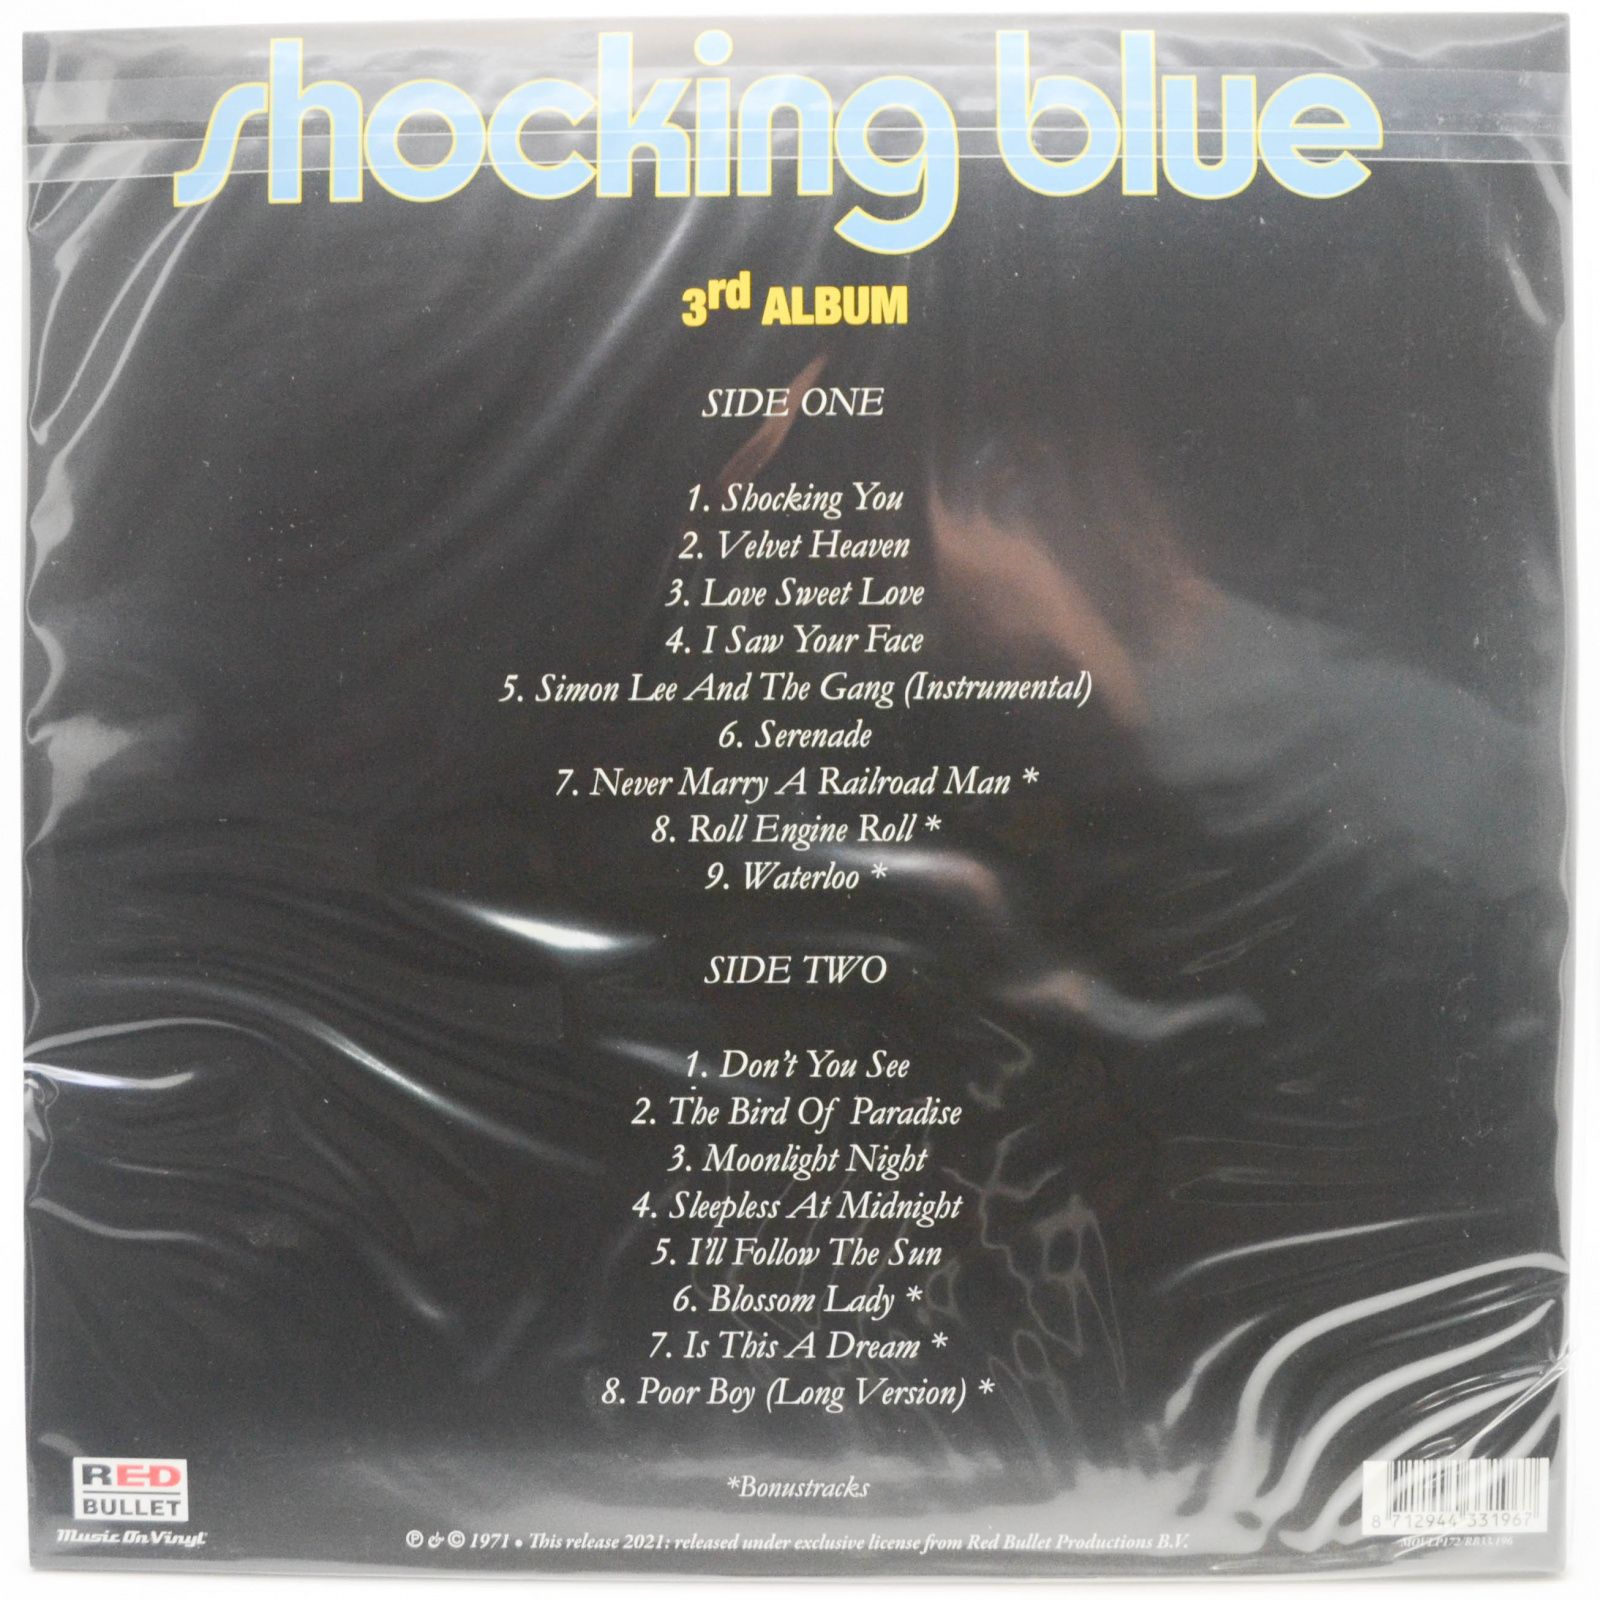 Shocking Blue — 3rd Album, 1971